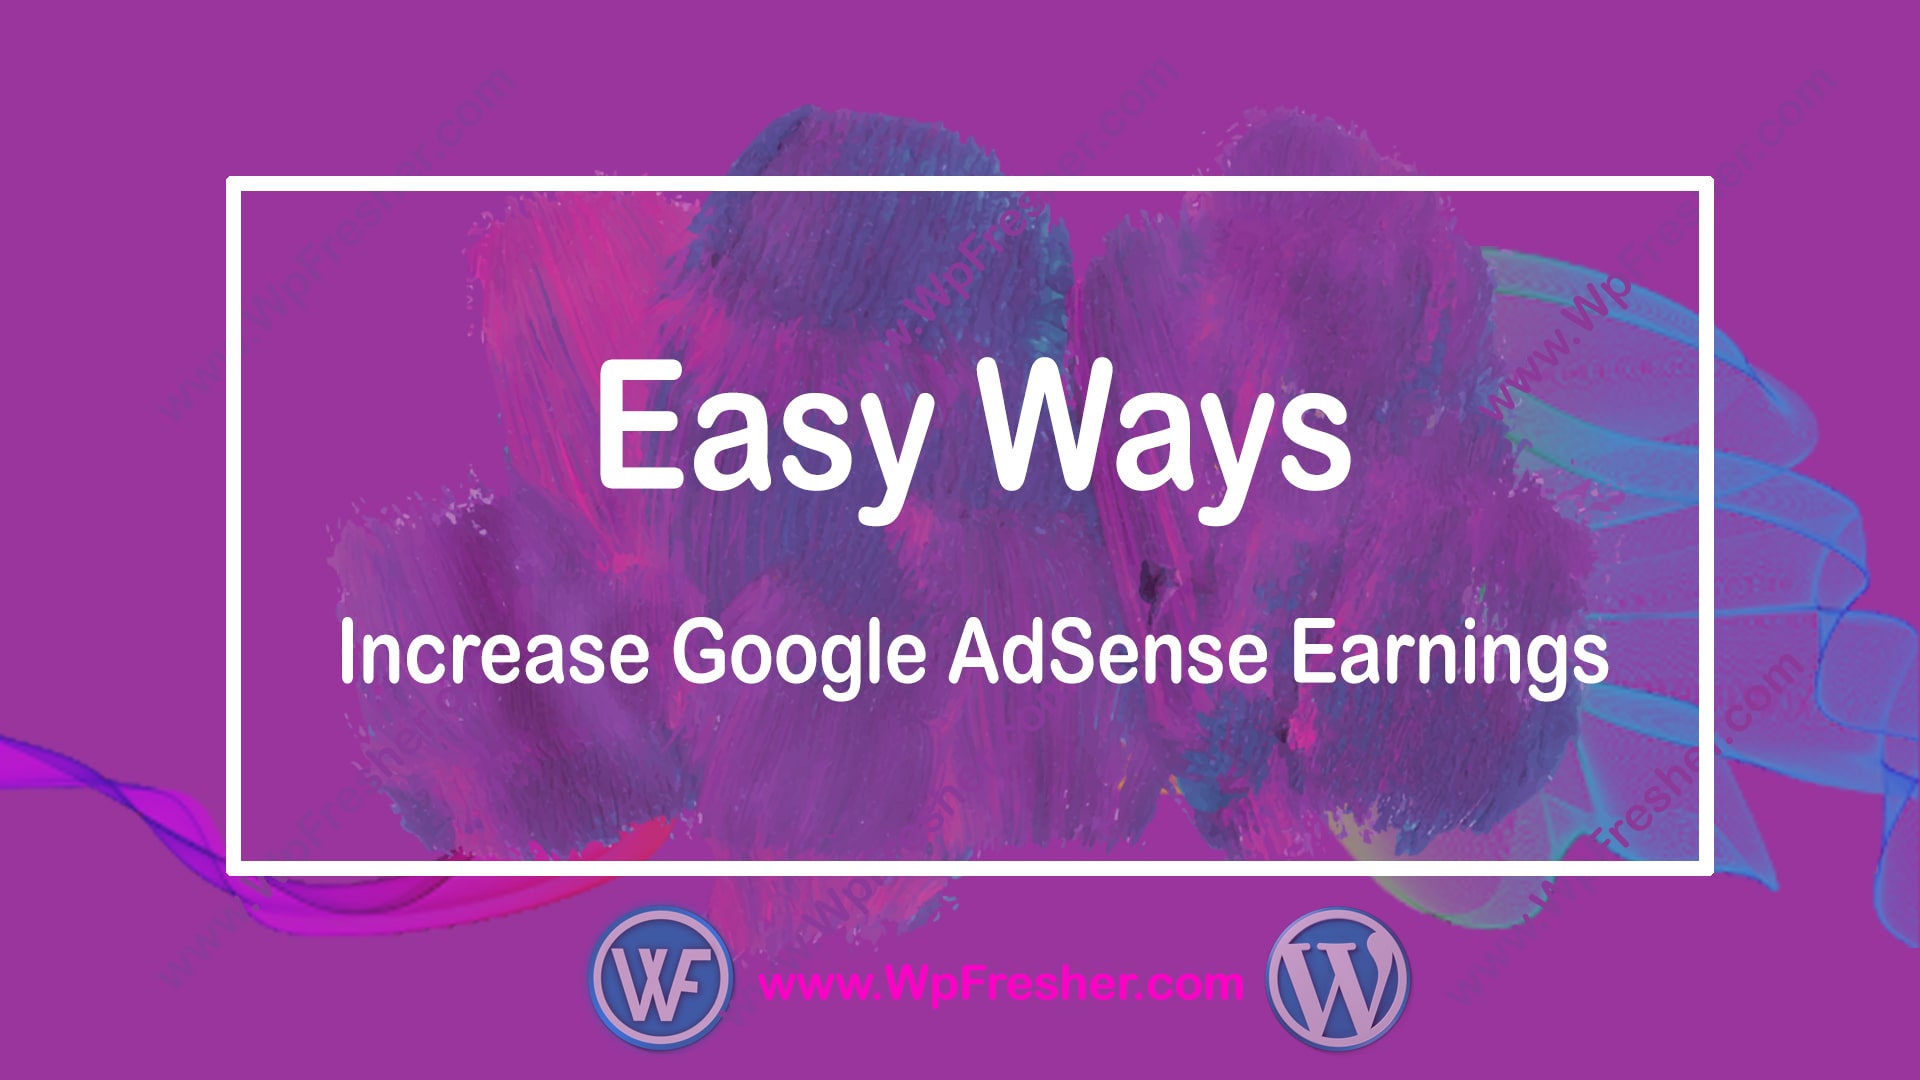 How to Increase Google AdSense Earnings-5 Easy Ways